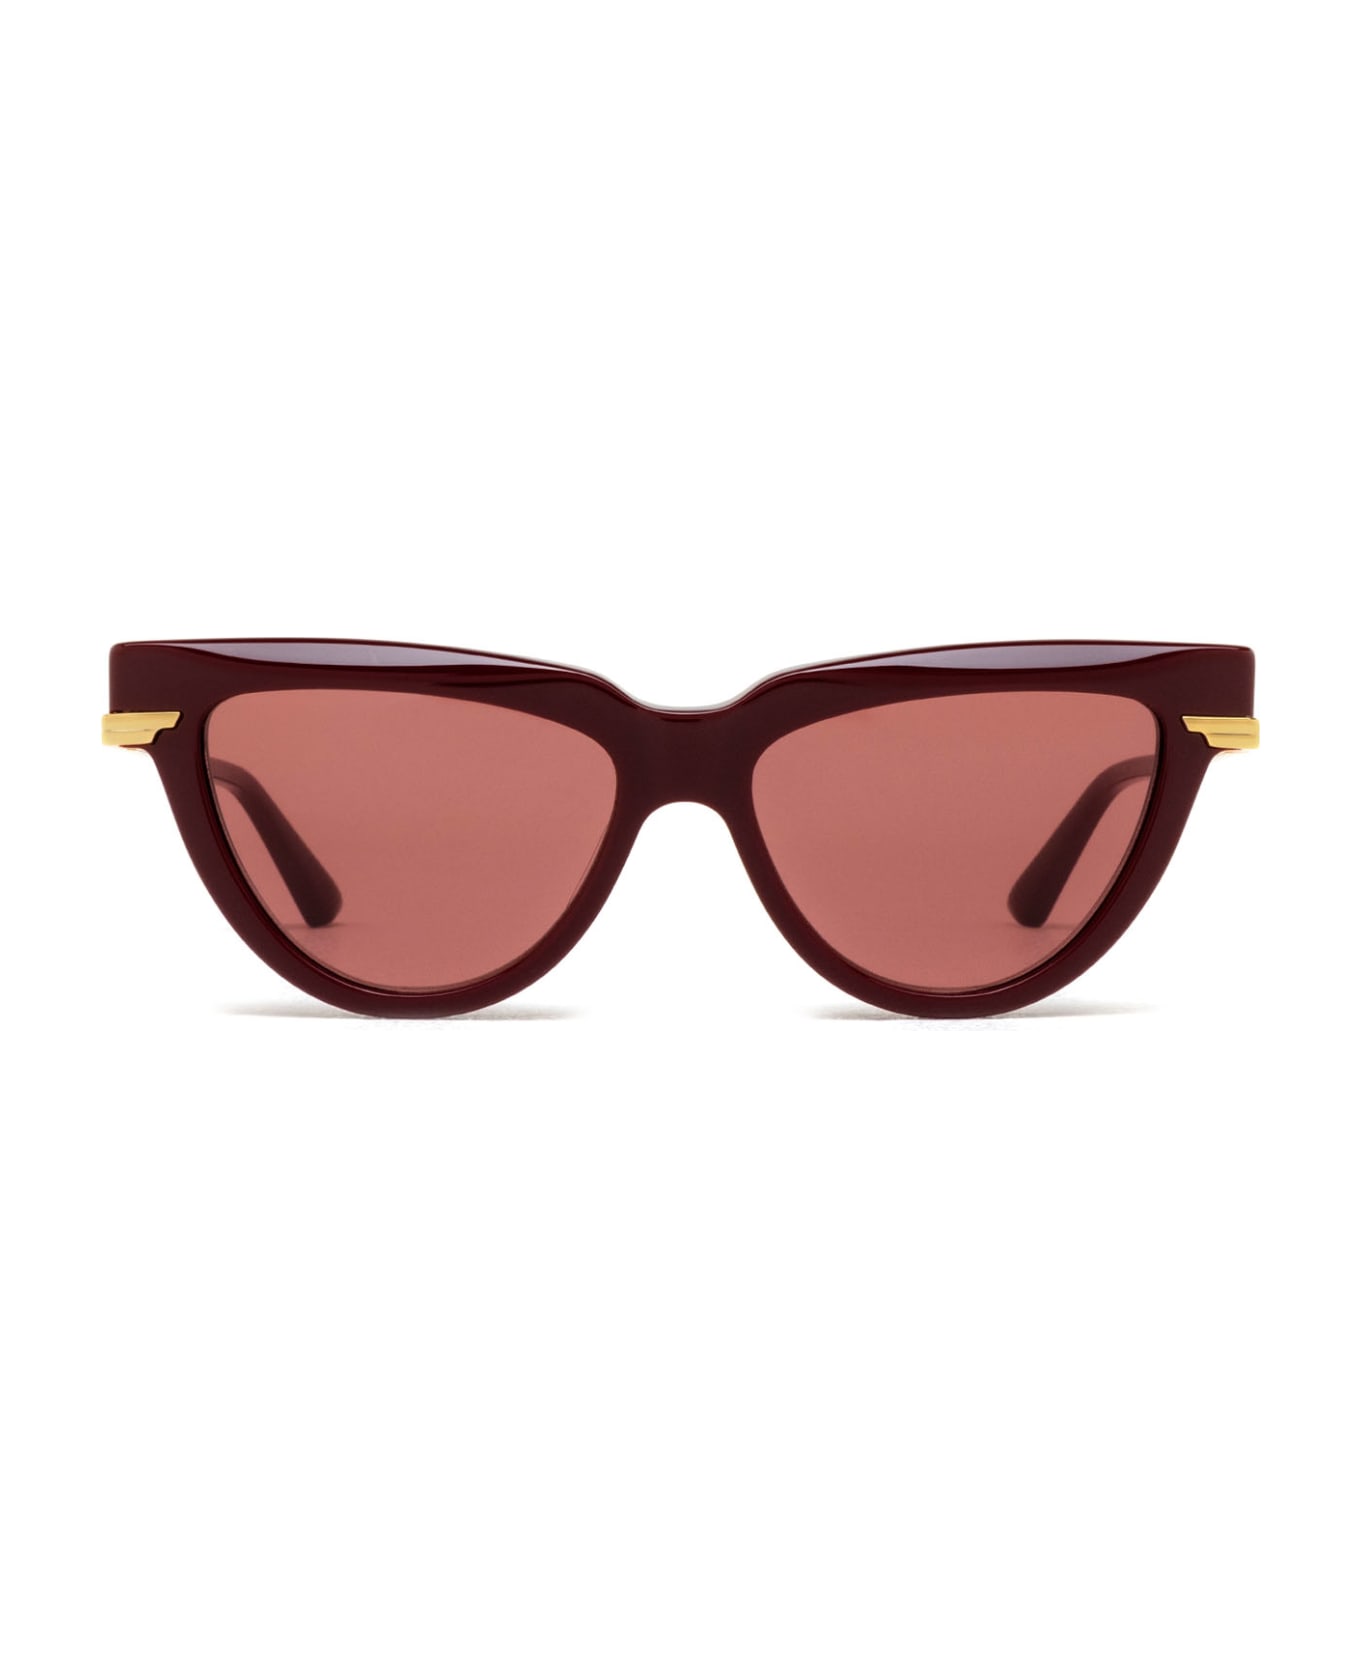 Bottega Veneta Eyewear Bv1265s Burgundy Sunglasses - Burgundy